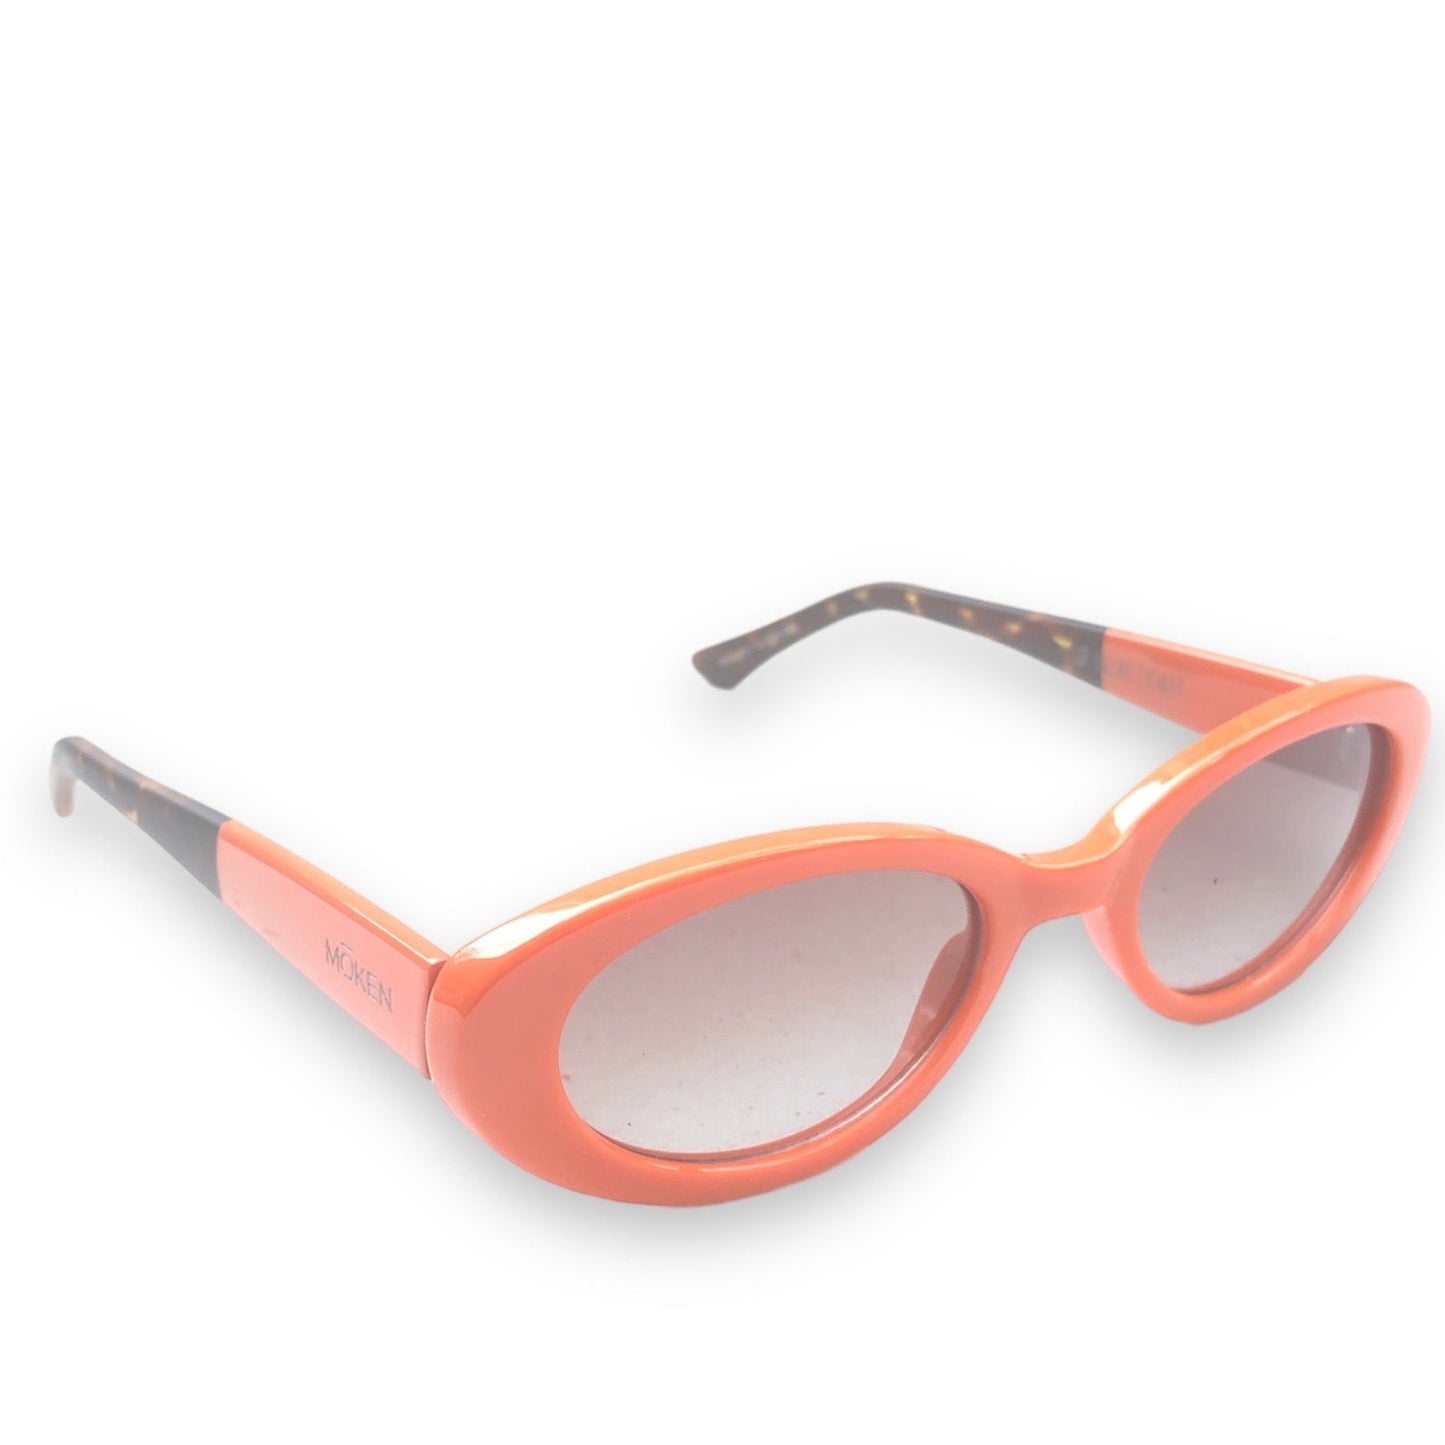 Ronda sunglasses made from plant-based plastic